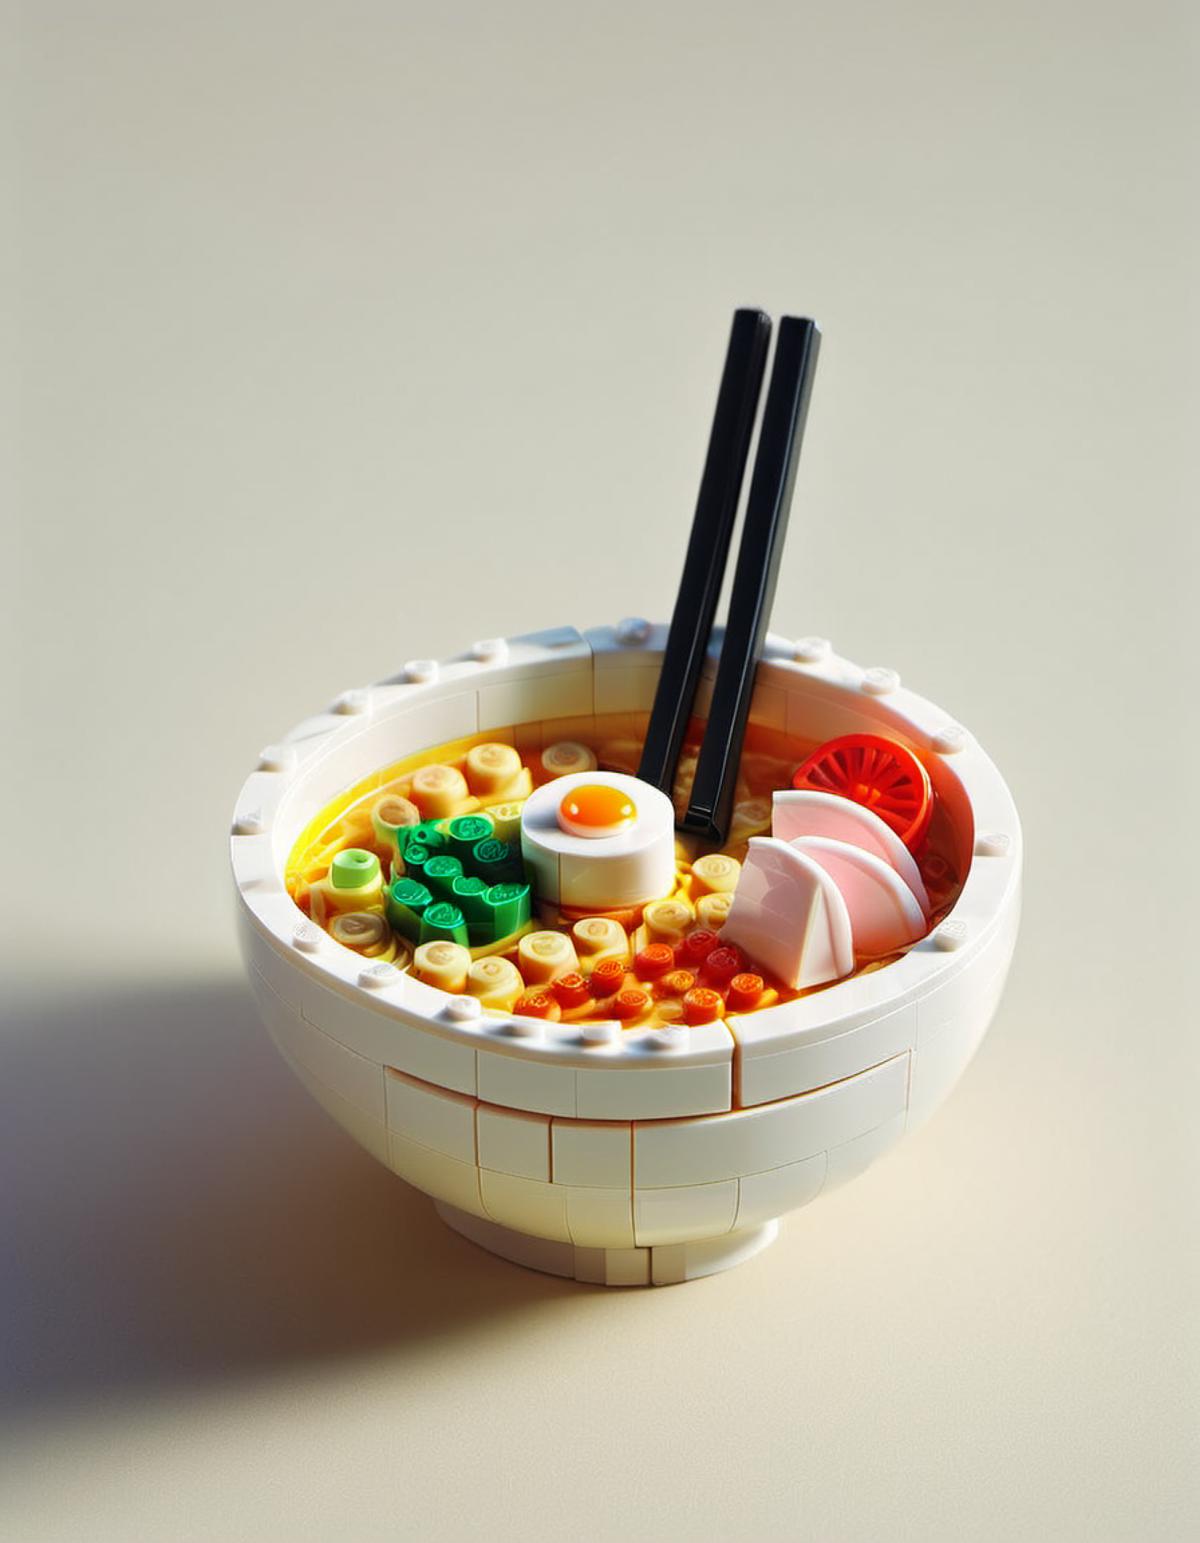 Lego Soup Bowl with Chopsticks